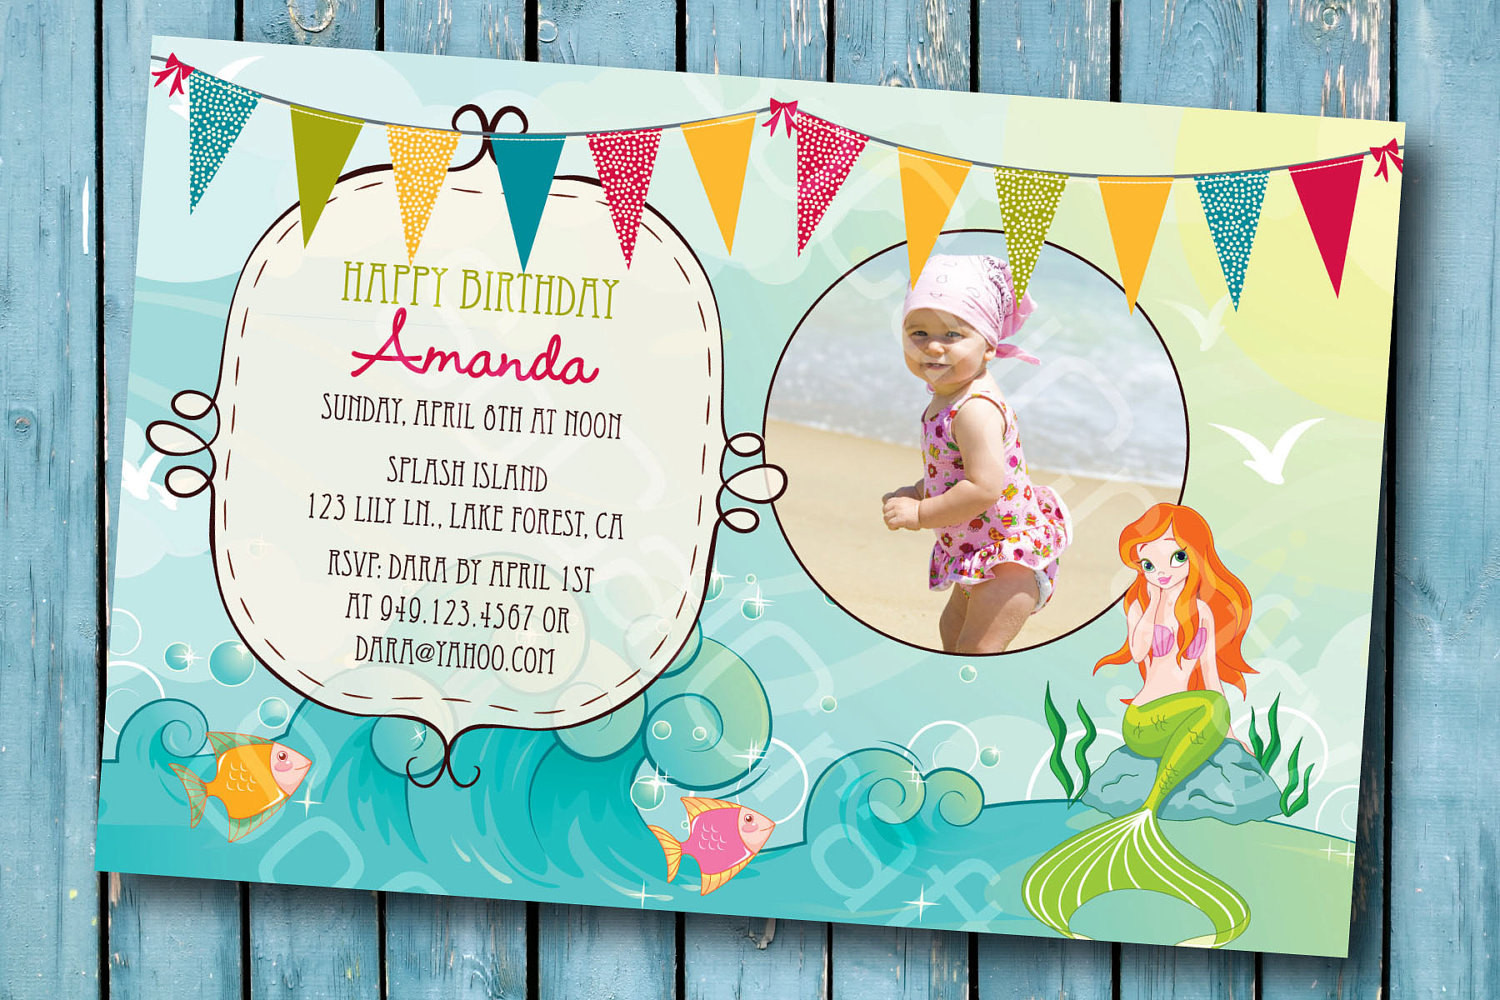 Little Mermaid Birthday Invitations
 My Little Mermaid Birthday Party Invitation Digital by